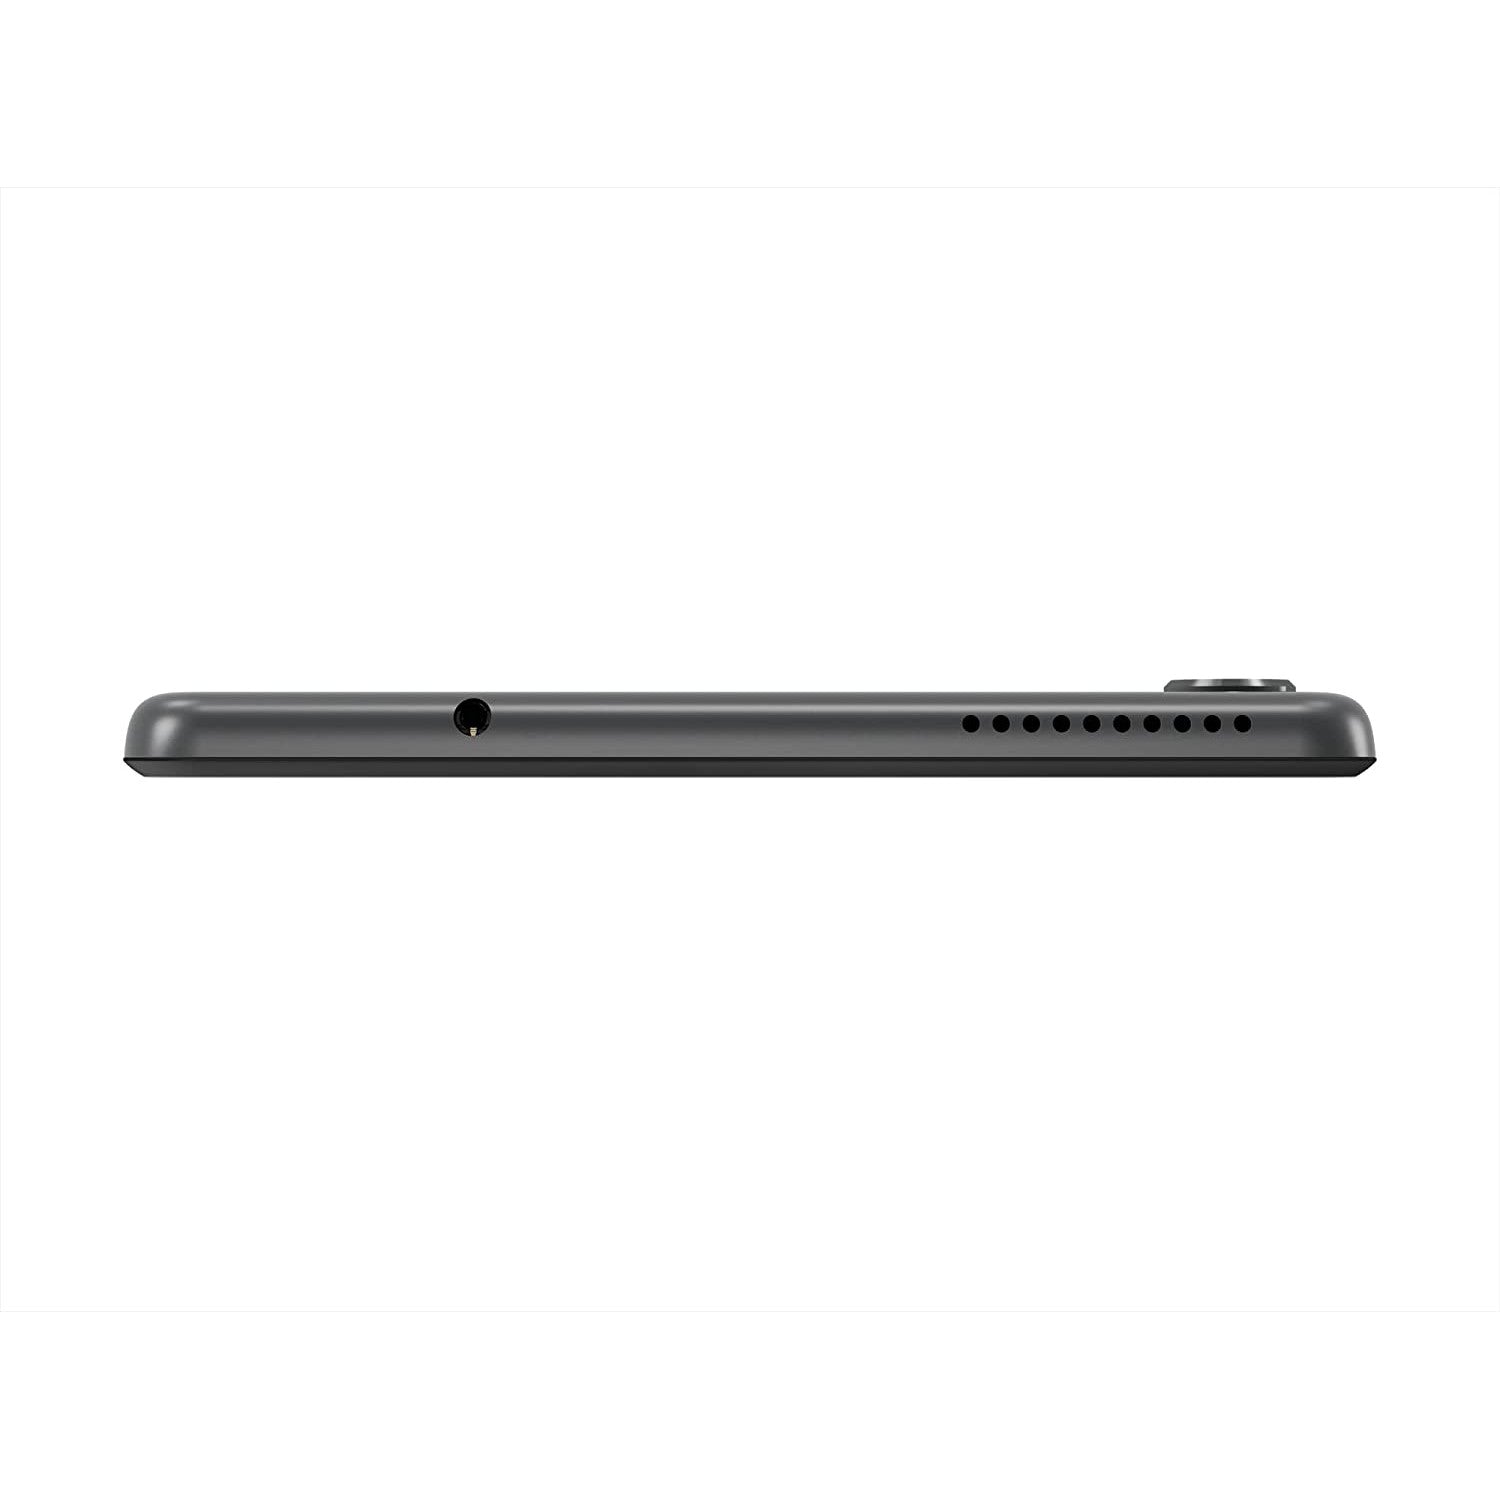 Lenovo M8 Smart Tab 8", 16GB Tablet - Grey (TB-8505X) - Refurbished Excellent